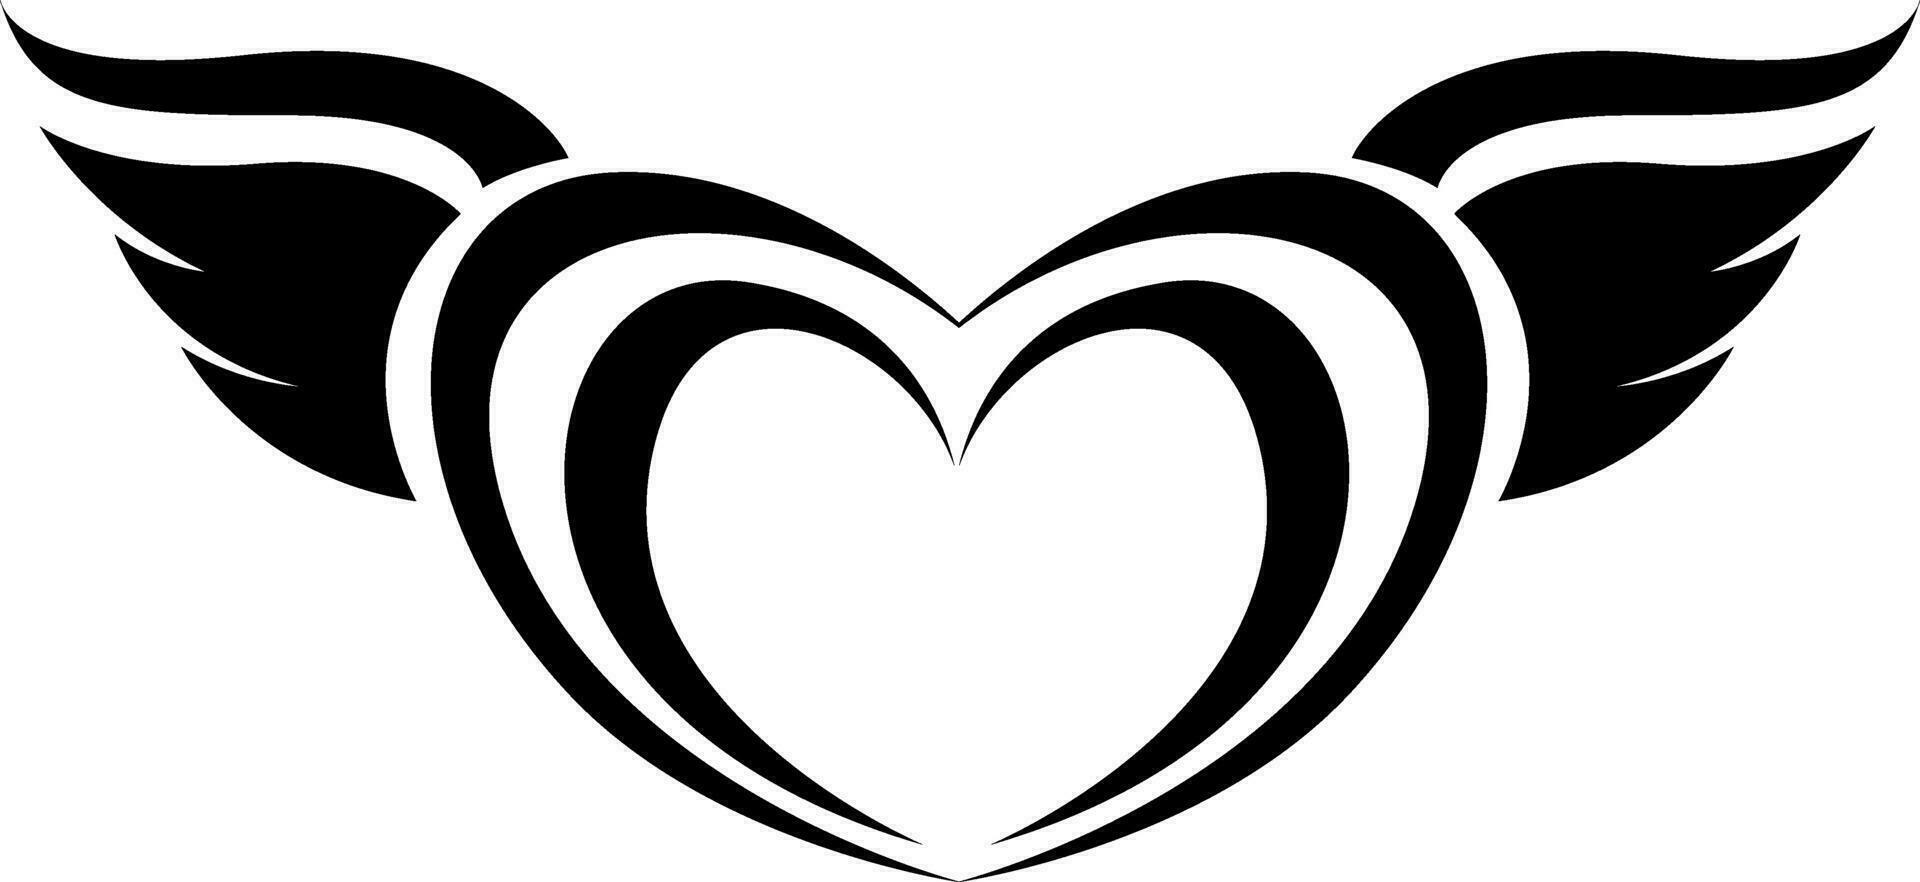 Big black heart tattoo, tattoo illustration, vector on a white background.